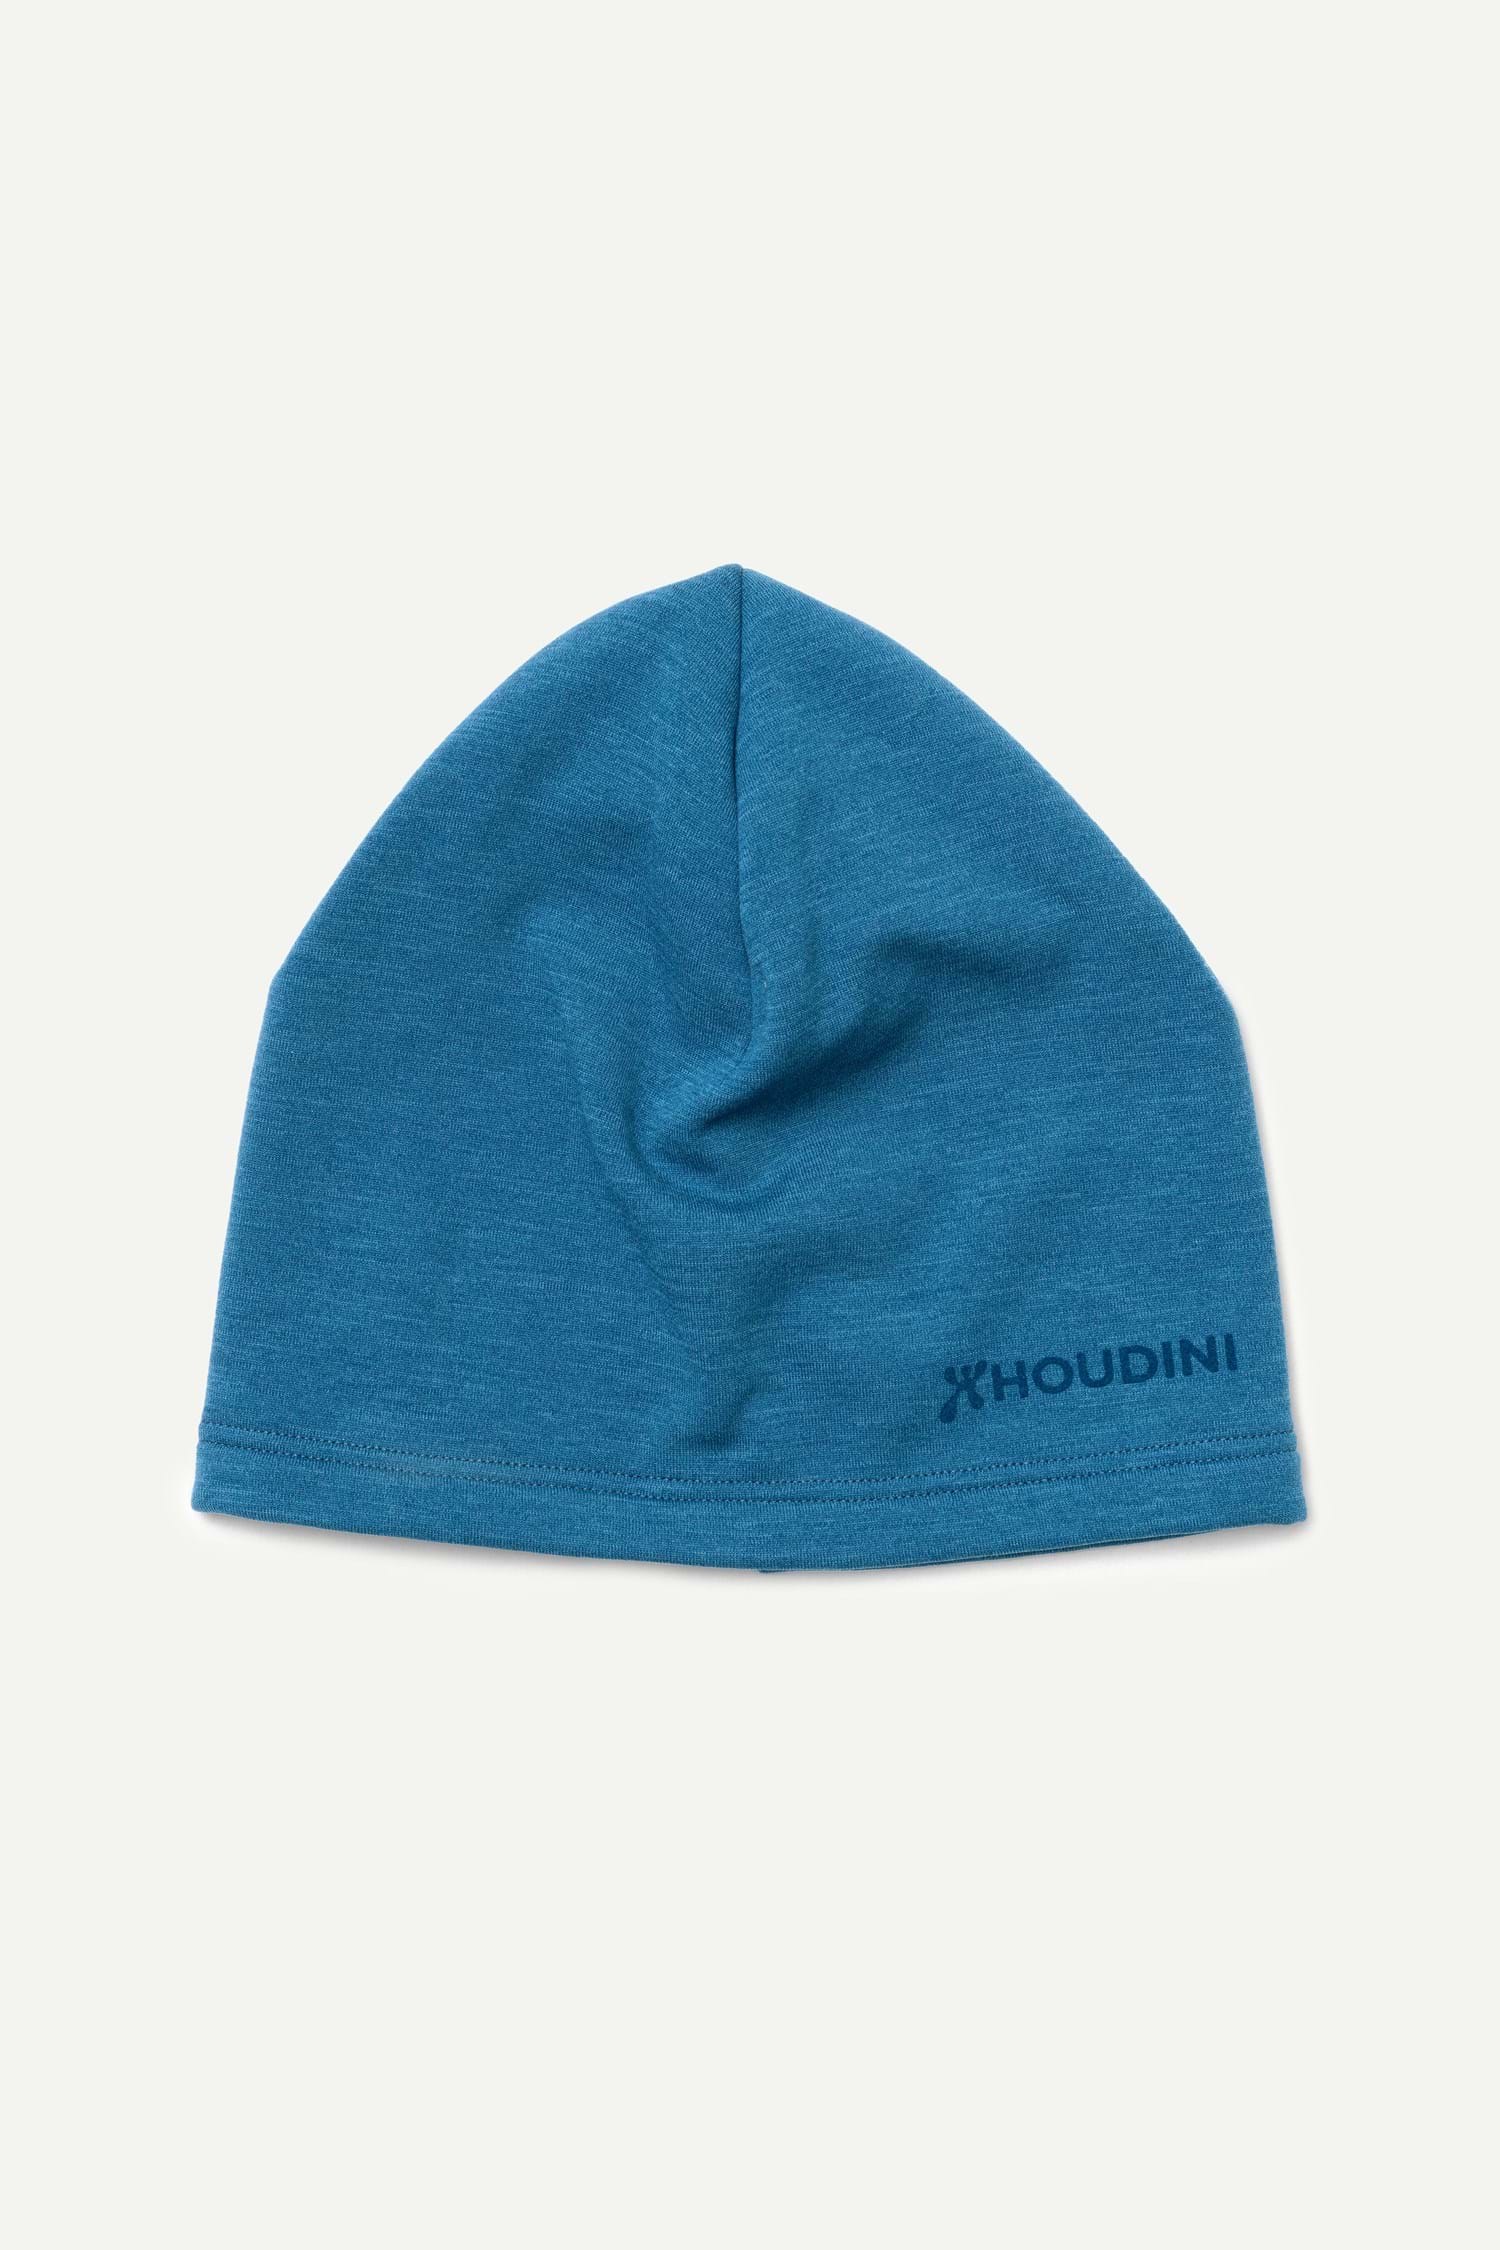 Houdini Outright Hat, Folk Blue, M